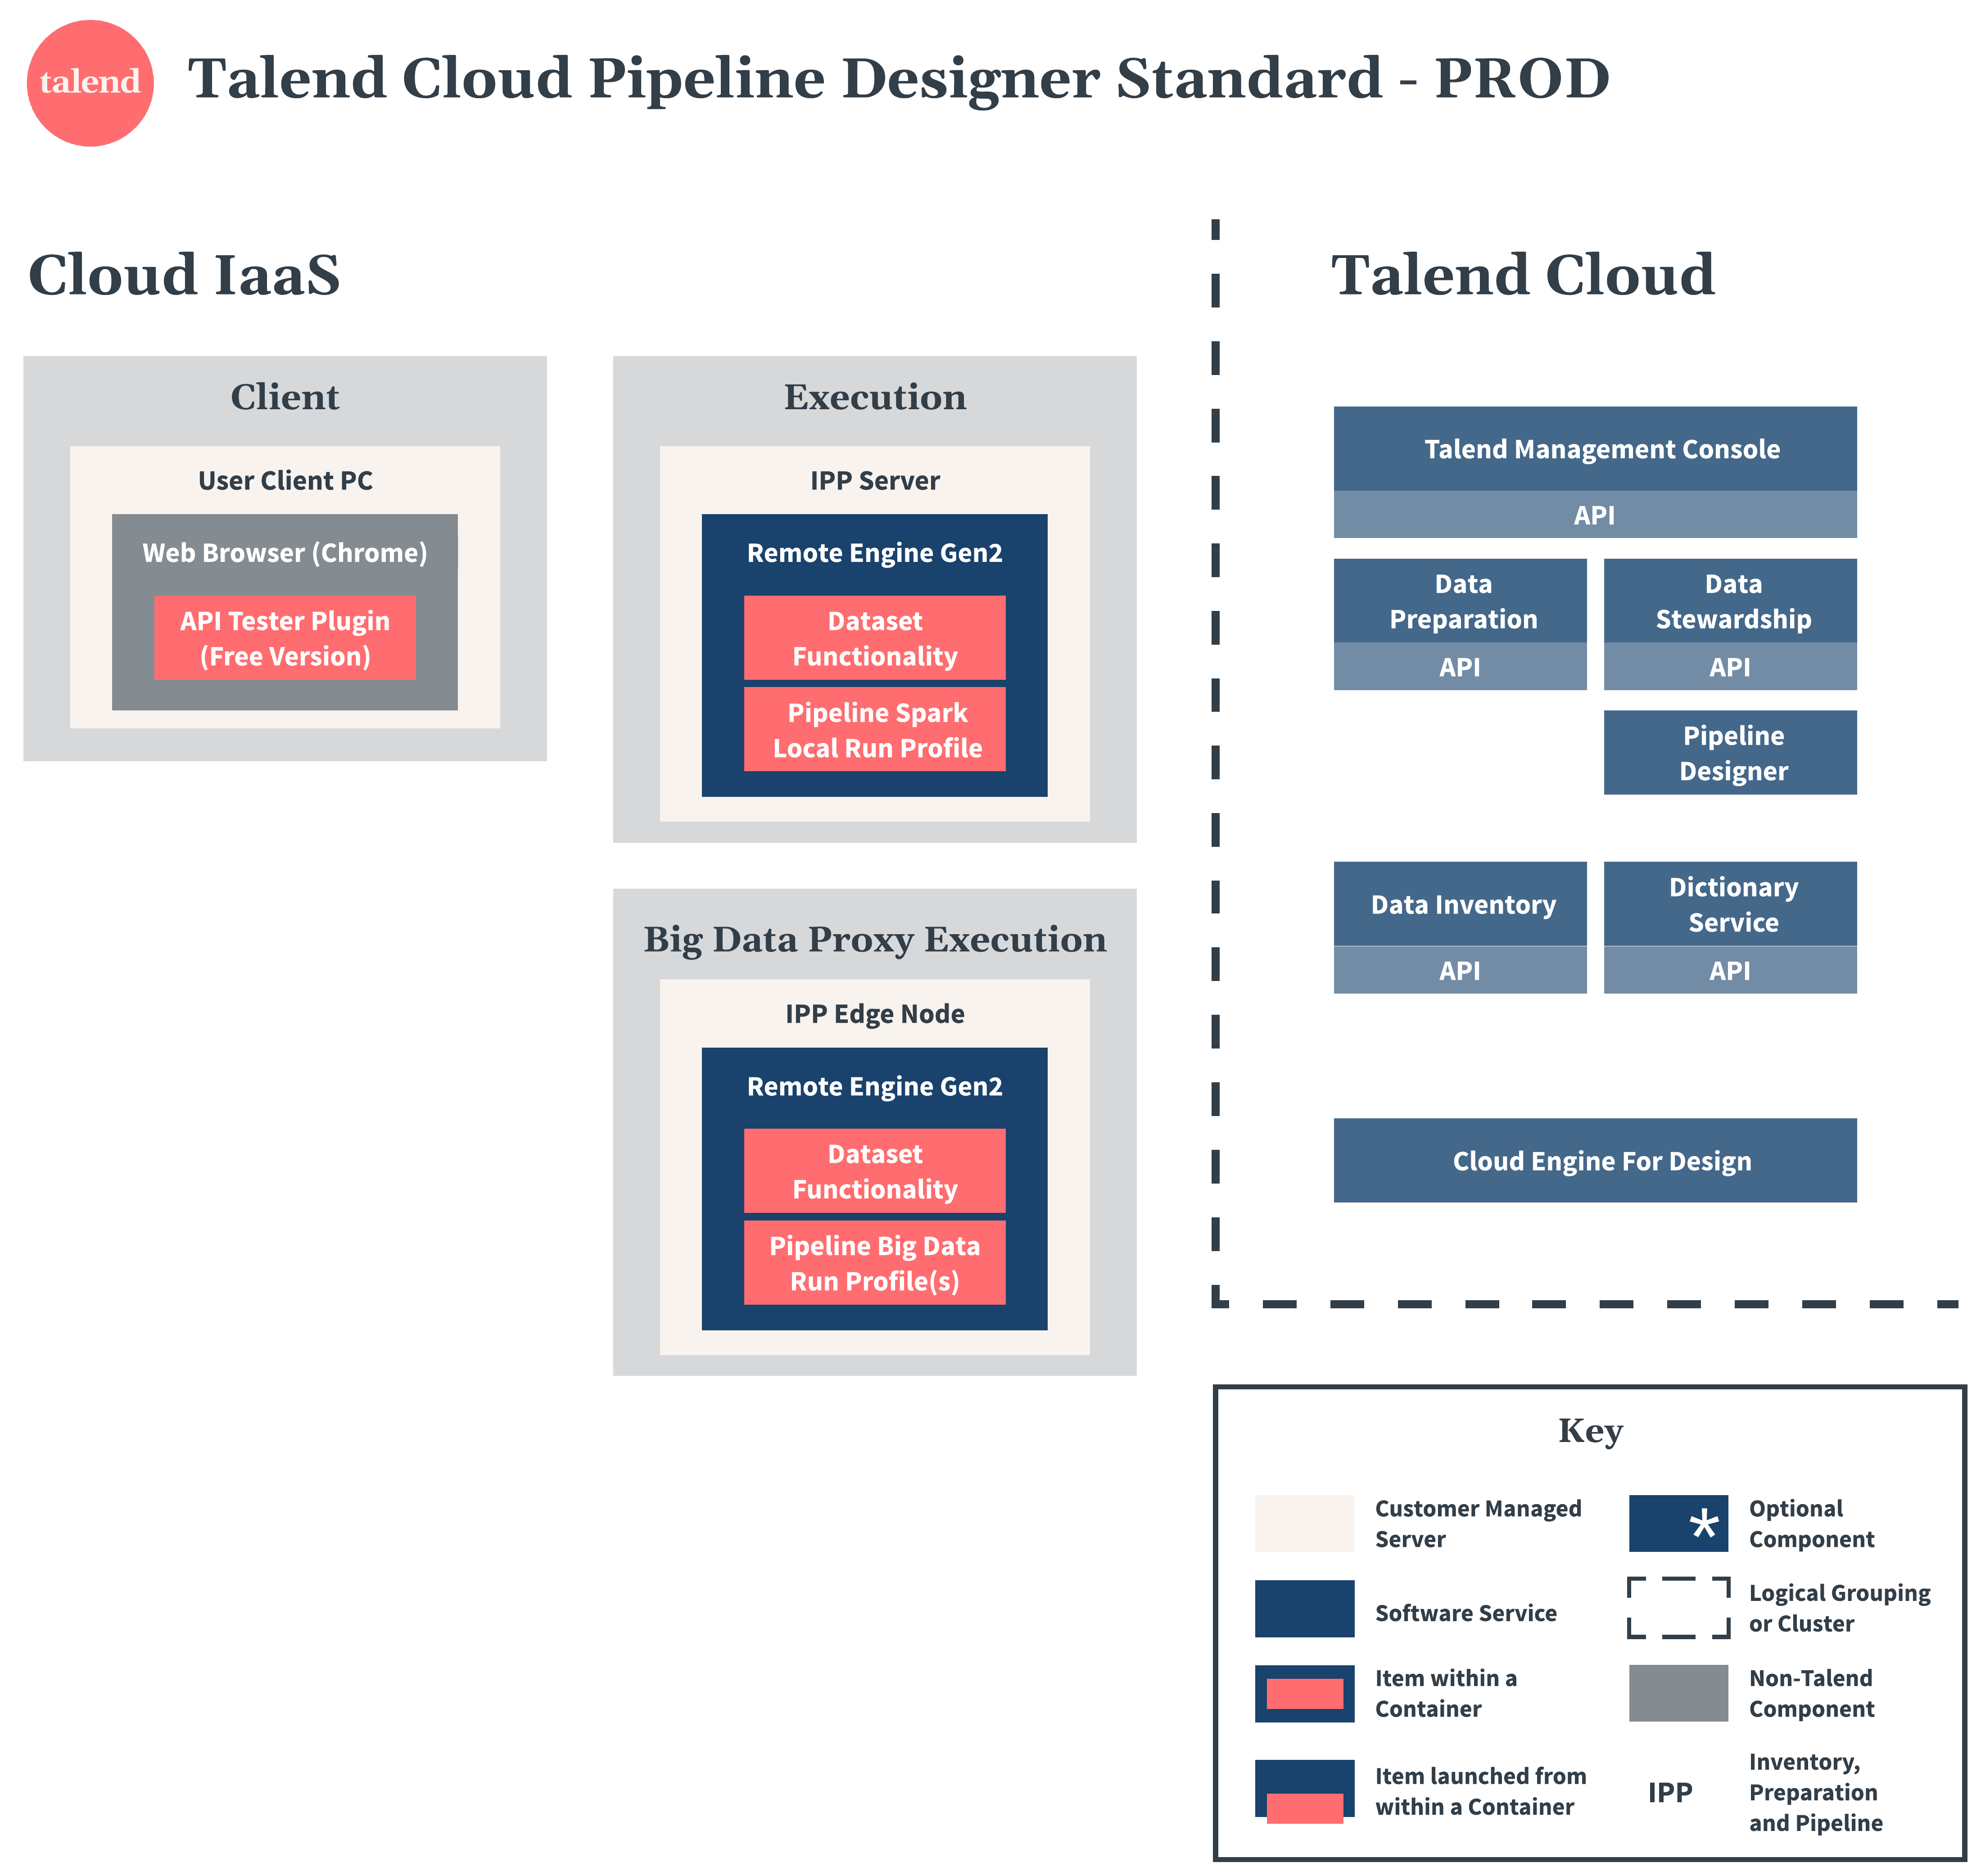 Talend Cloud Pipeline Designerの標準本番環境図。